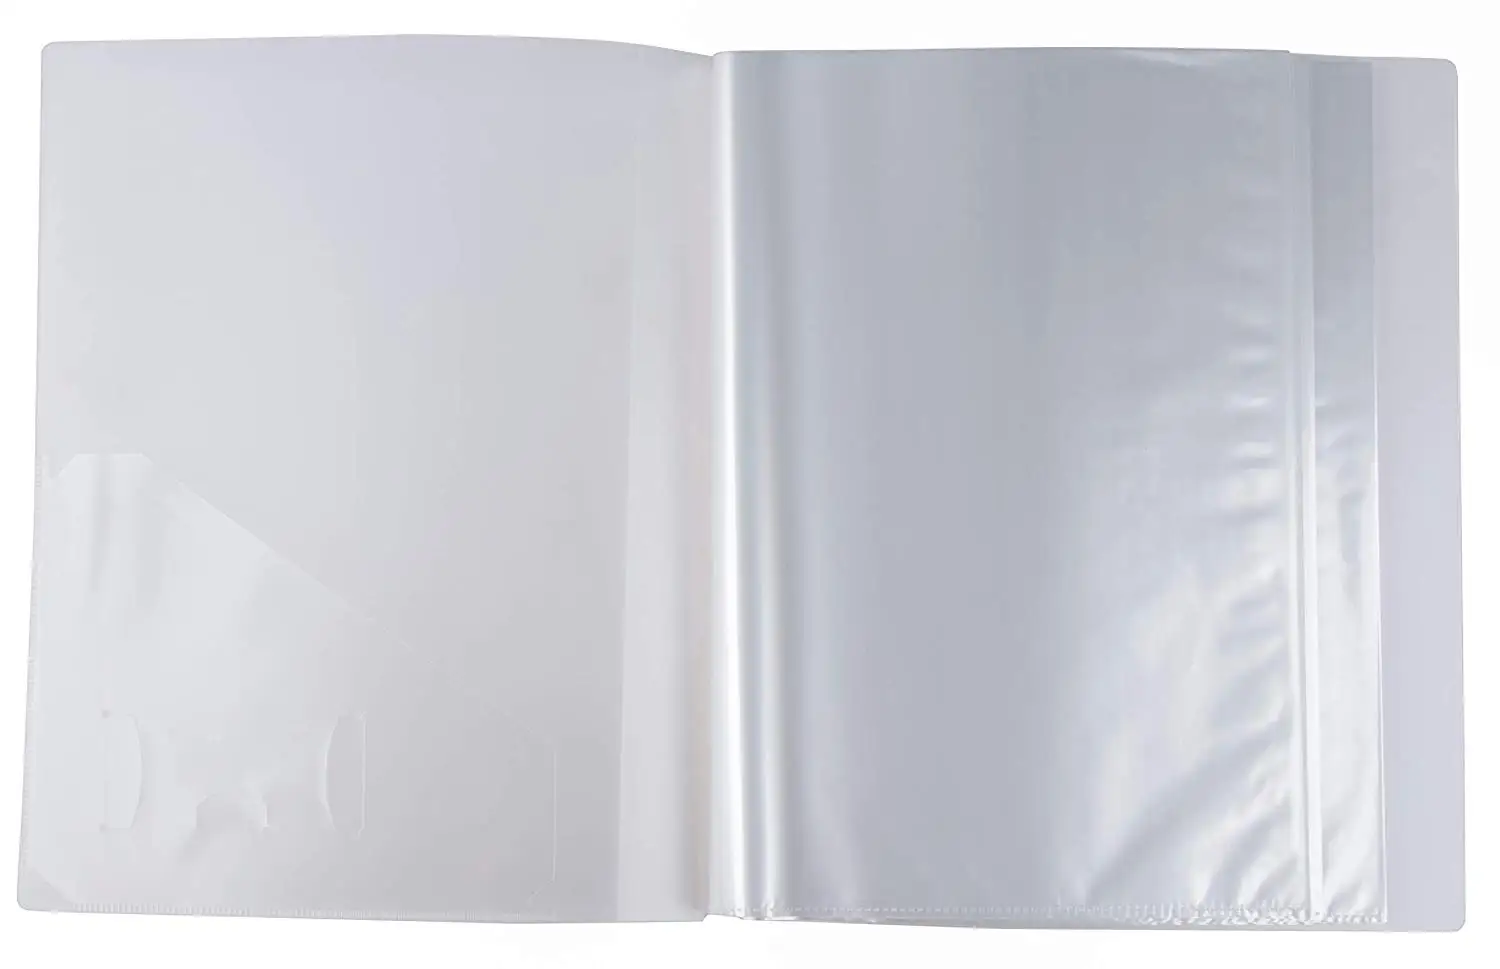 cartas libro transparente para obras de arte 40 bolsillos transparentes fundas Libro de presentación puede acomodar 21.6 x 29 cm portafolio de arte protectores 